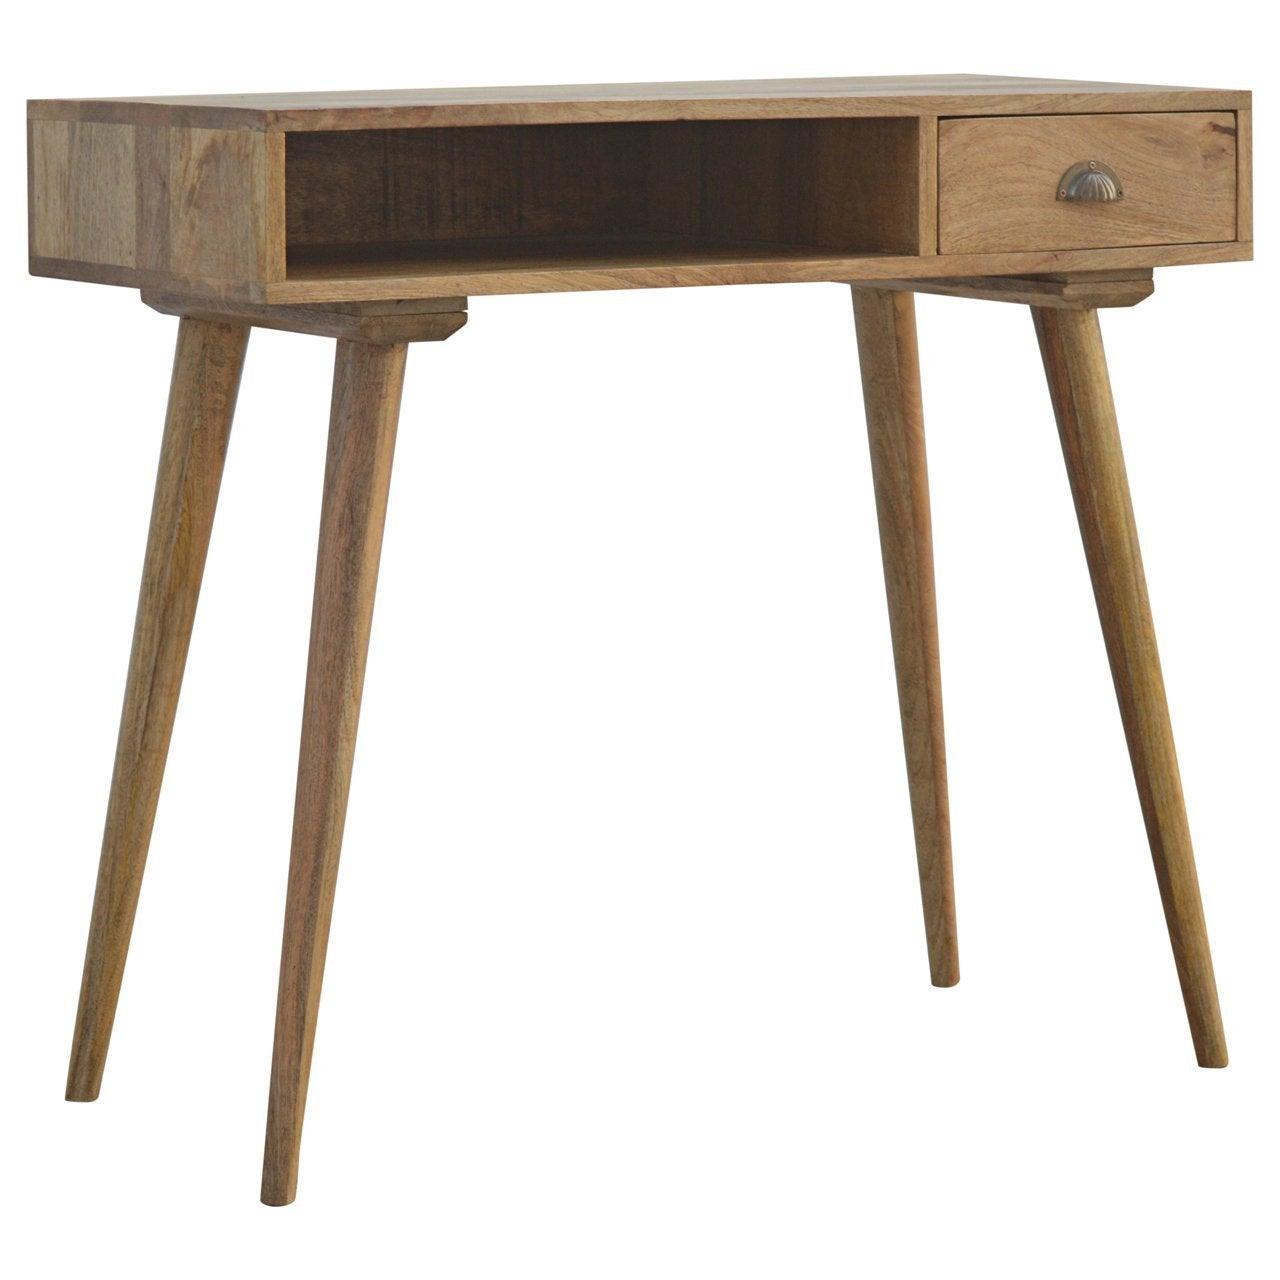 Solid wood writing desk with open slot - crimblefest furniture - image 1